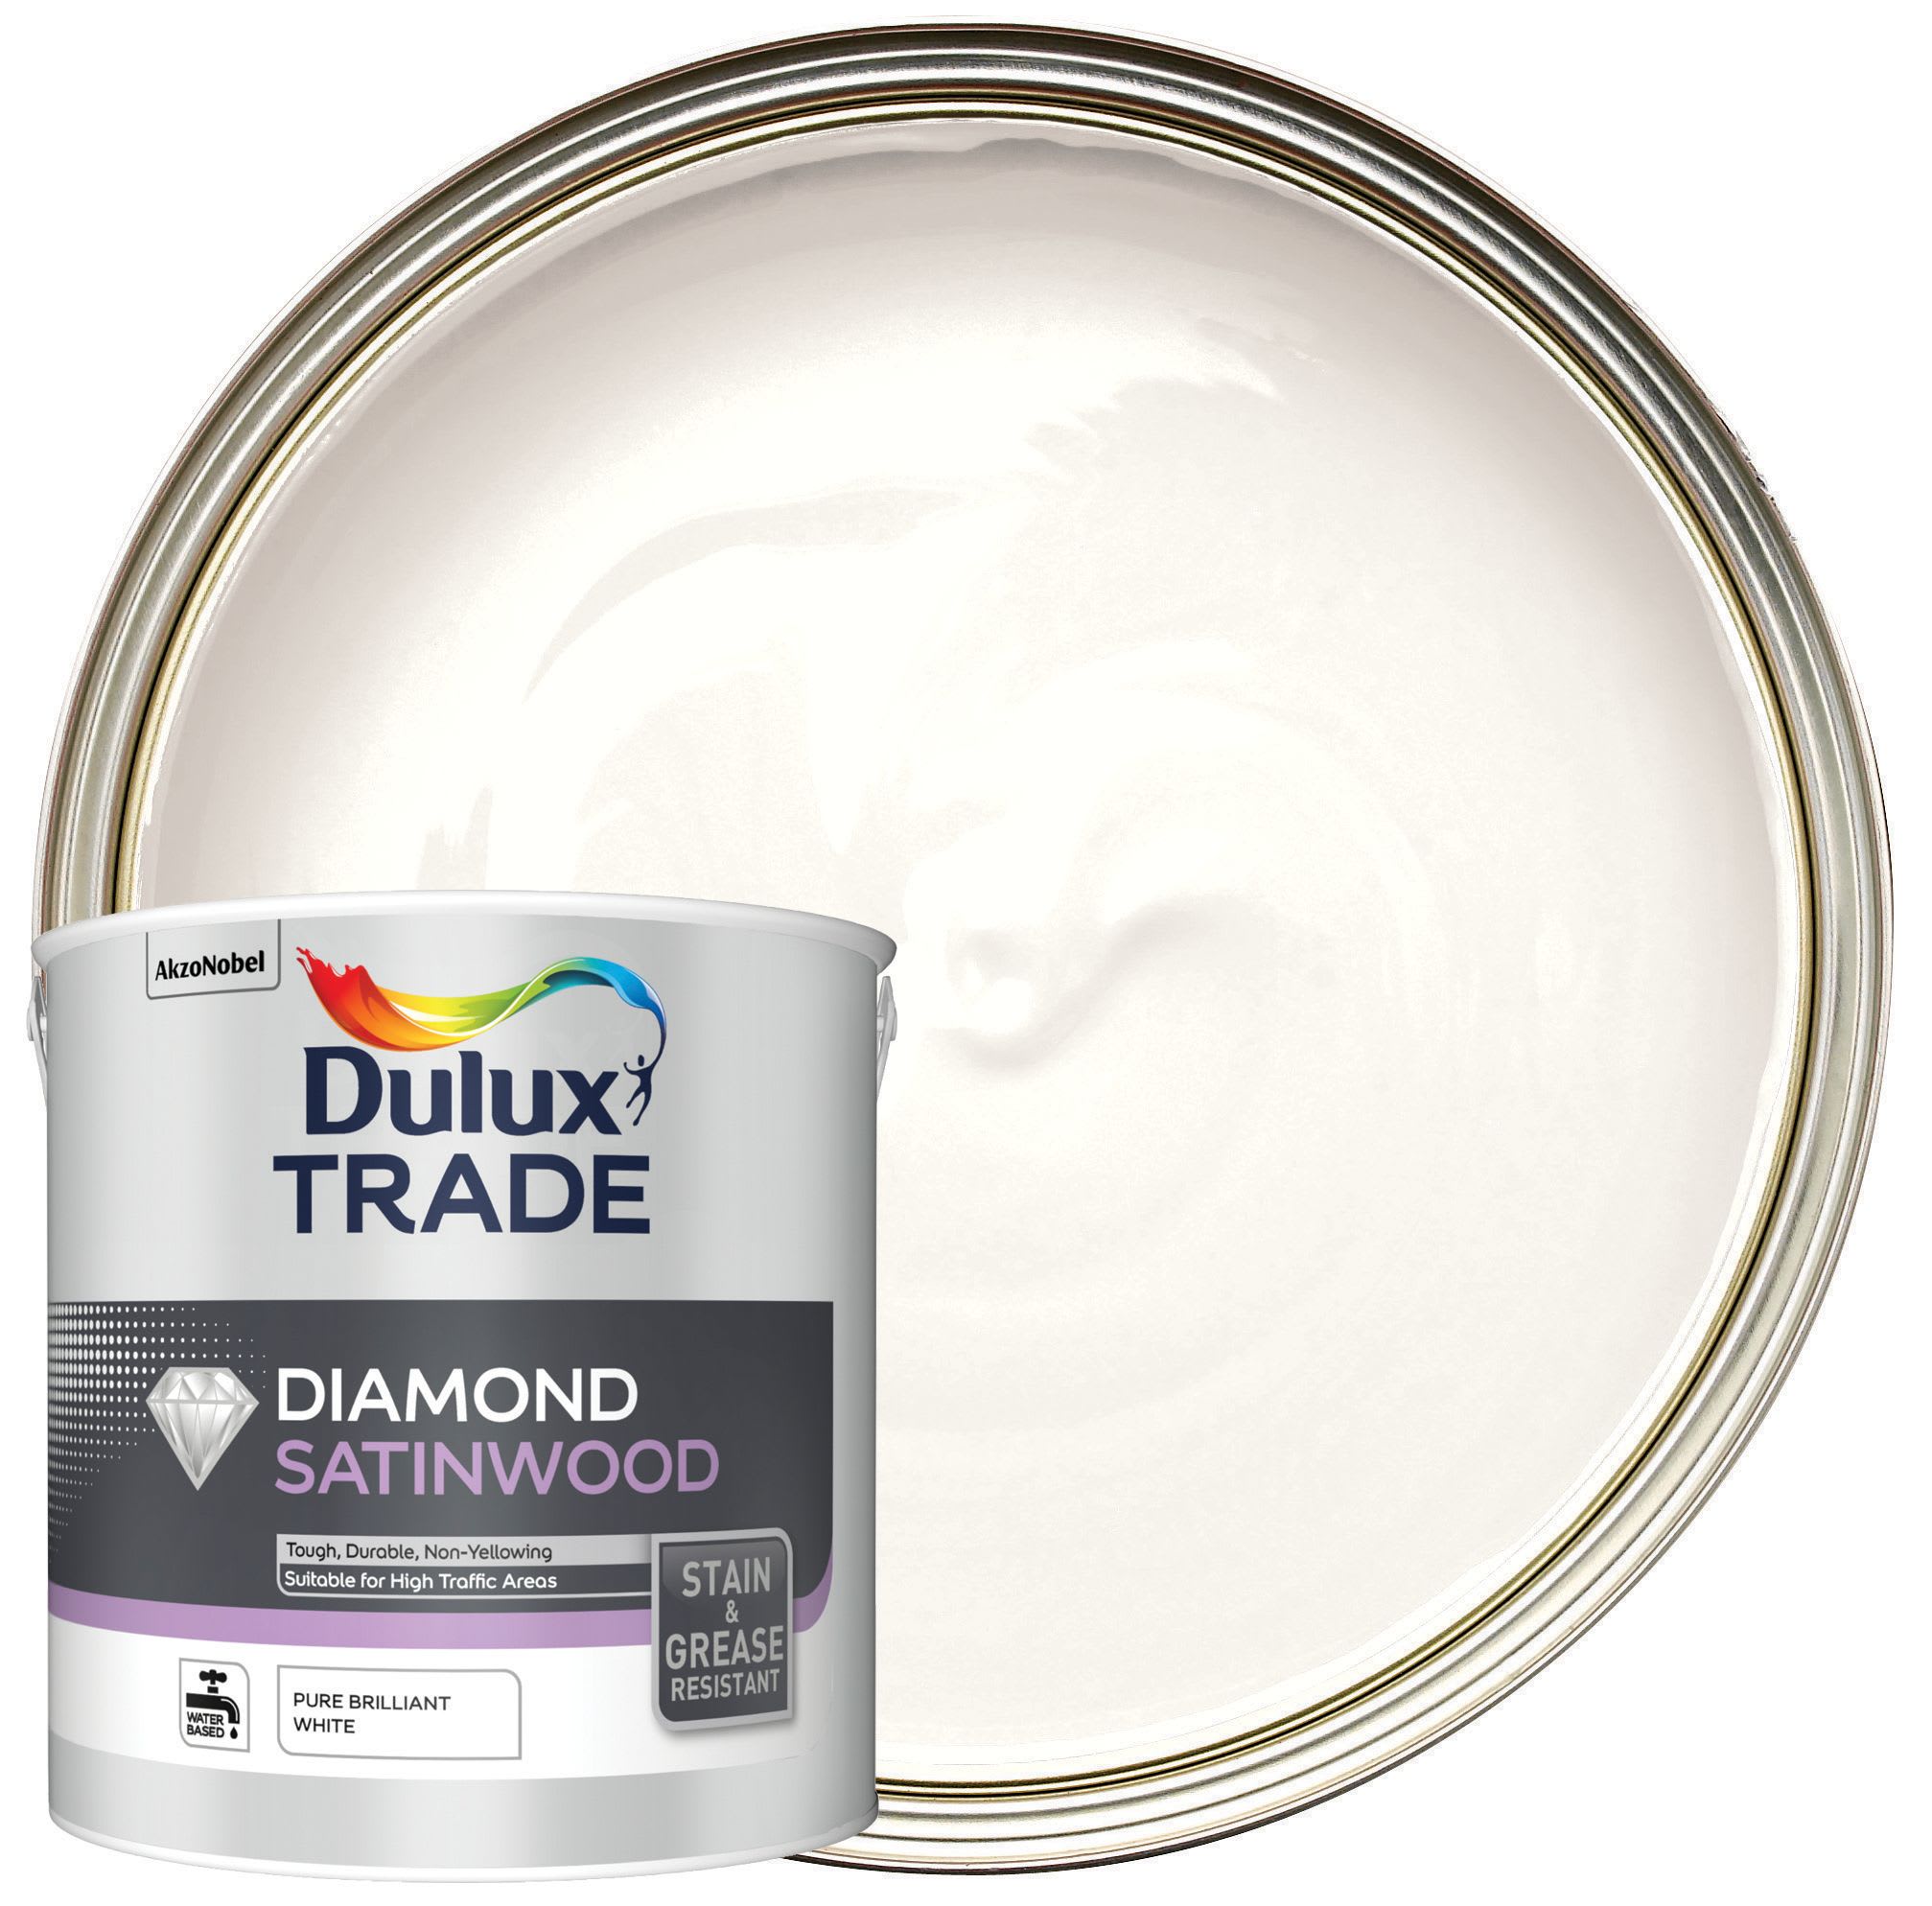 Dulux Trade Diamond Satinwood Paint - Pure Brilliant